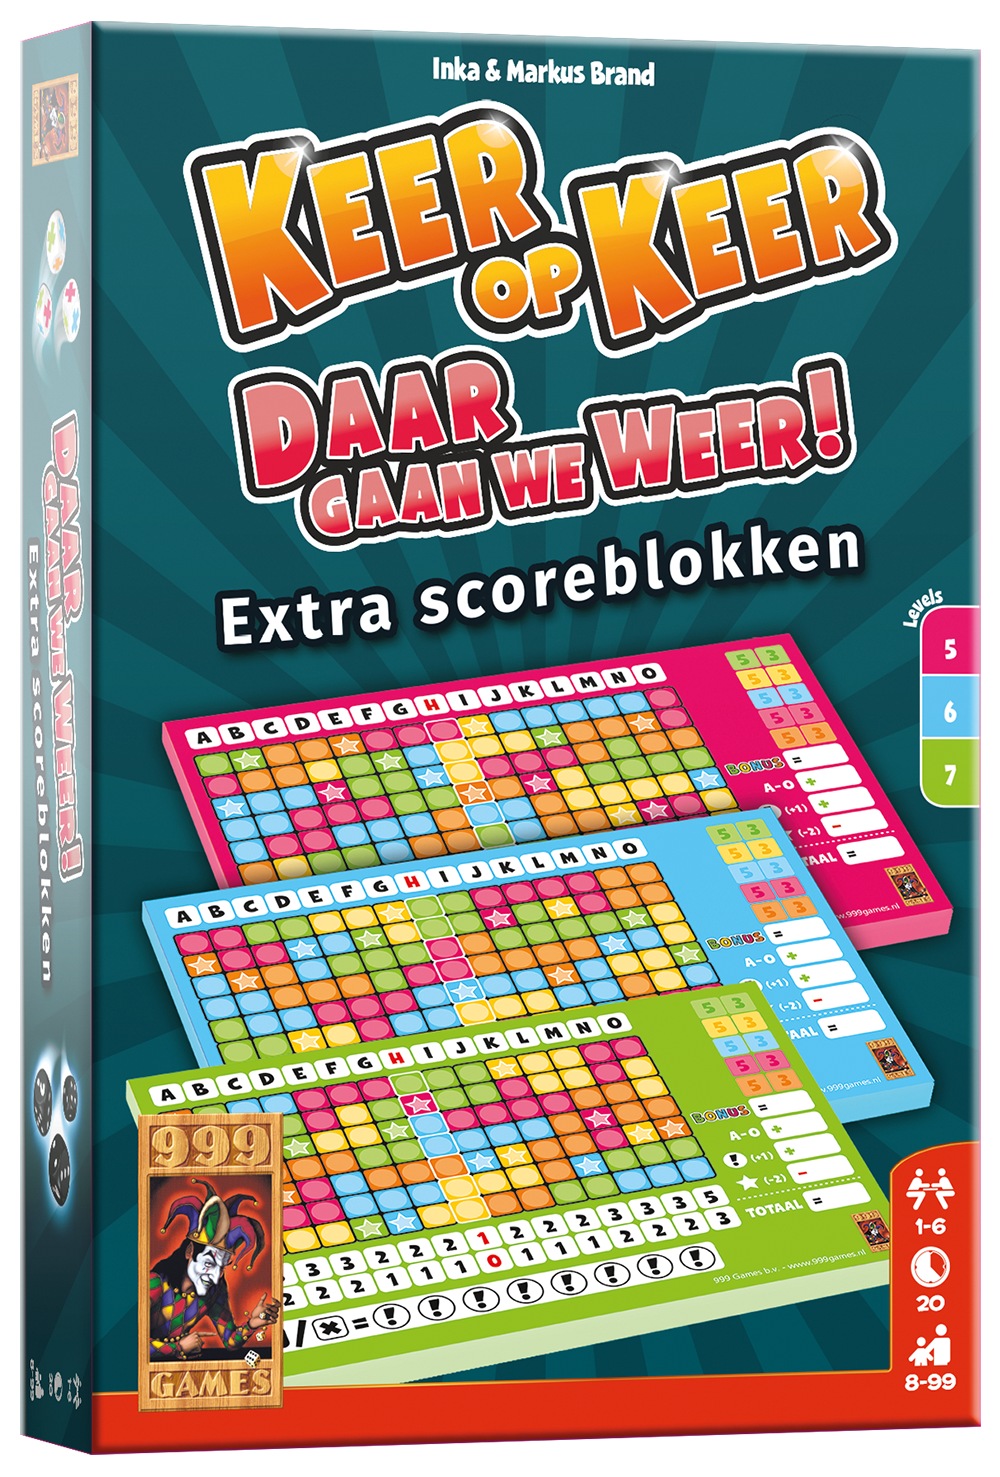 999 Games Keer op Keer Scoreblok 3 stuks Level 5, 6 en 7 Dobbelspel